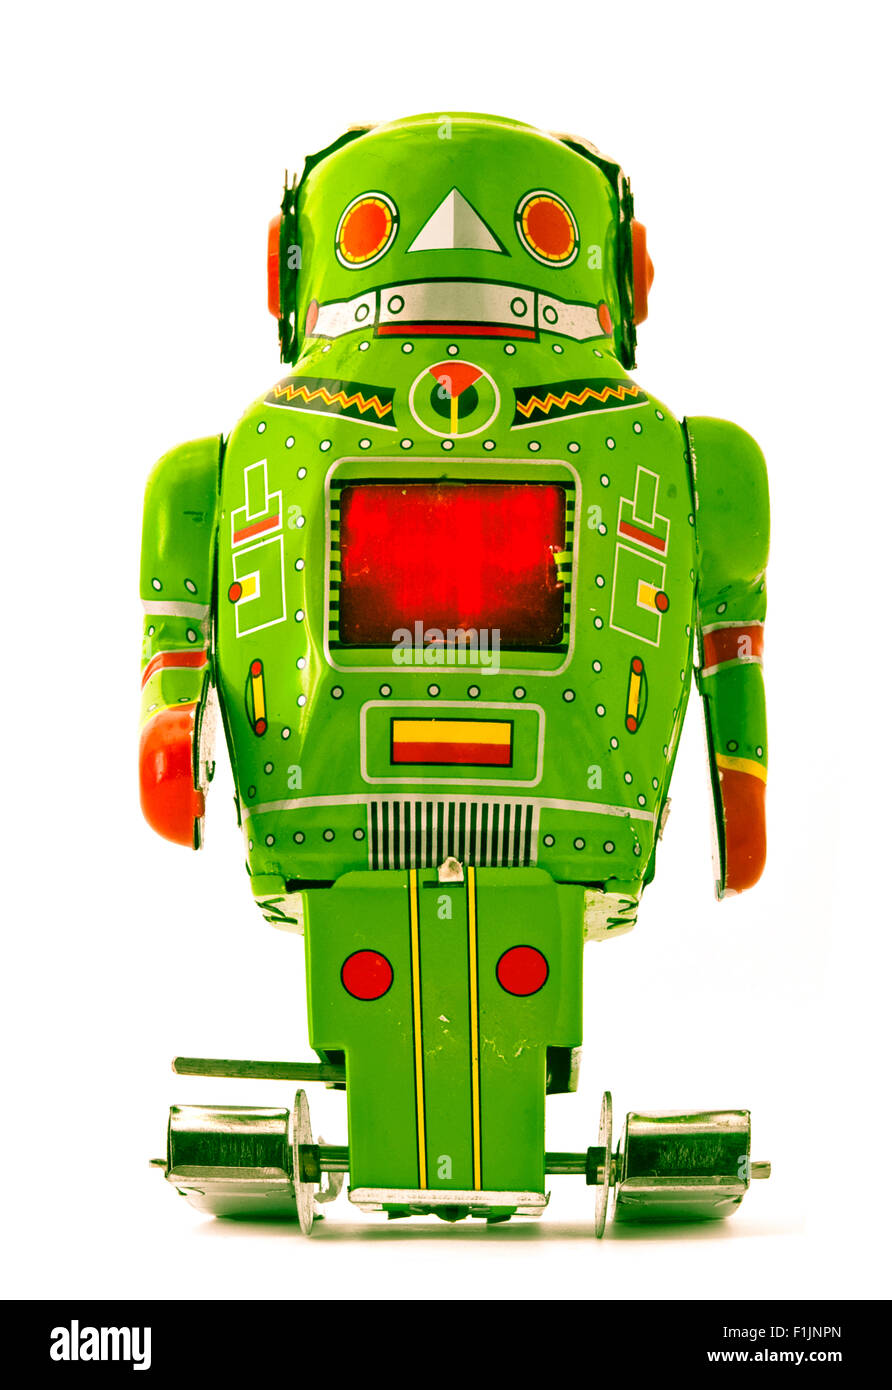 retro green toy - Alamy